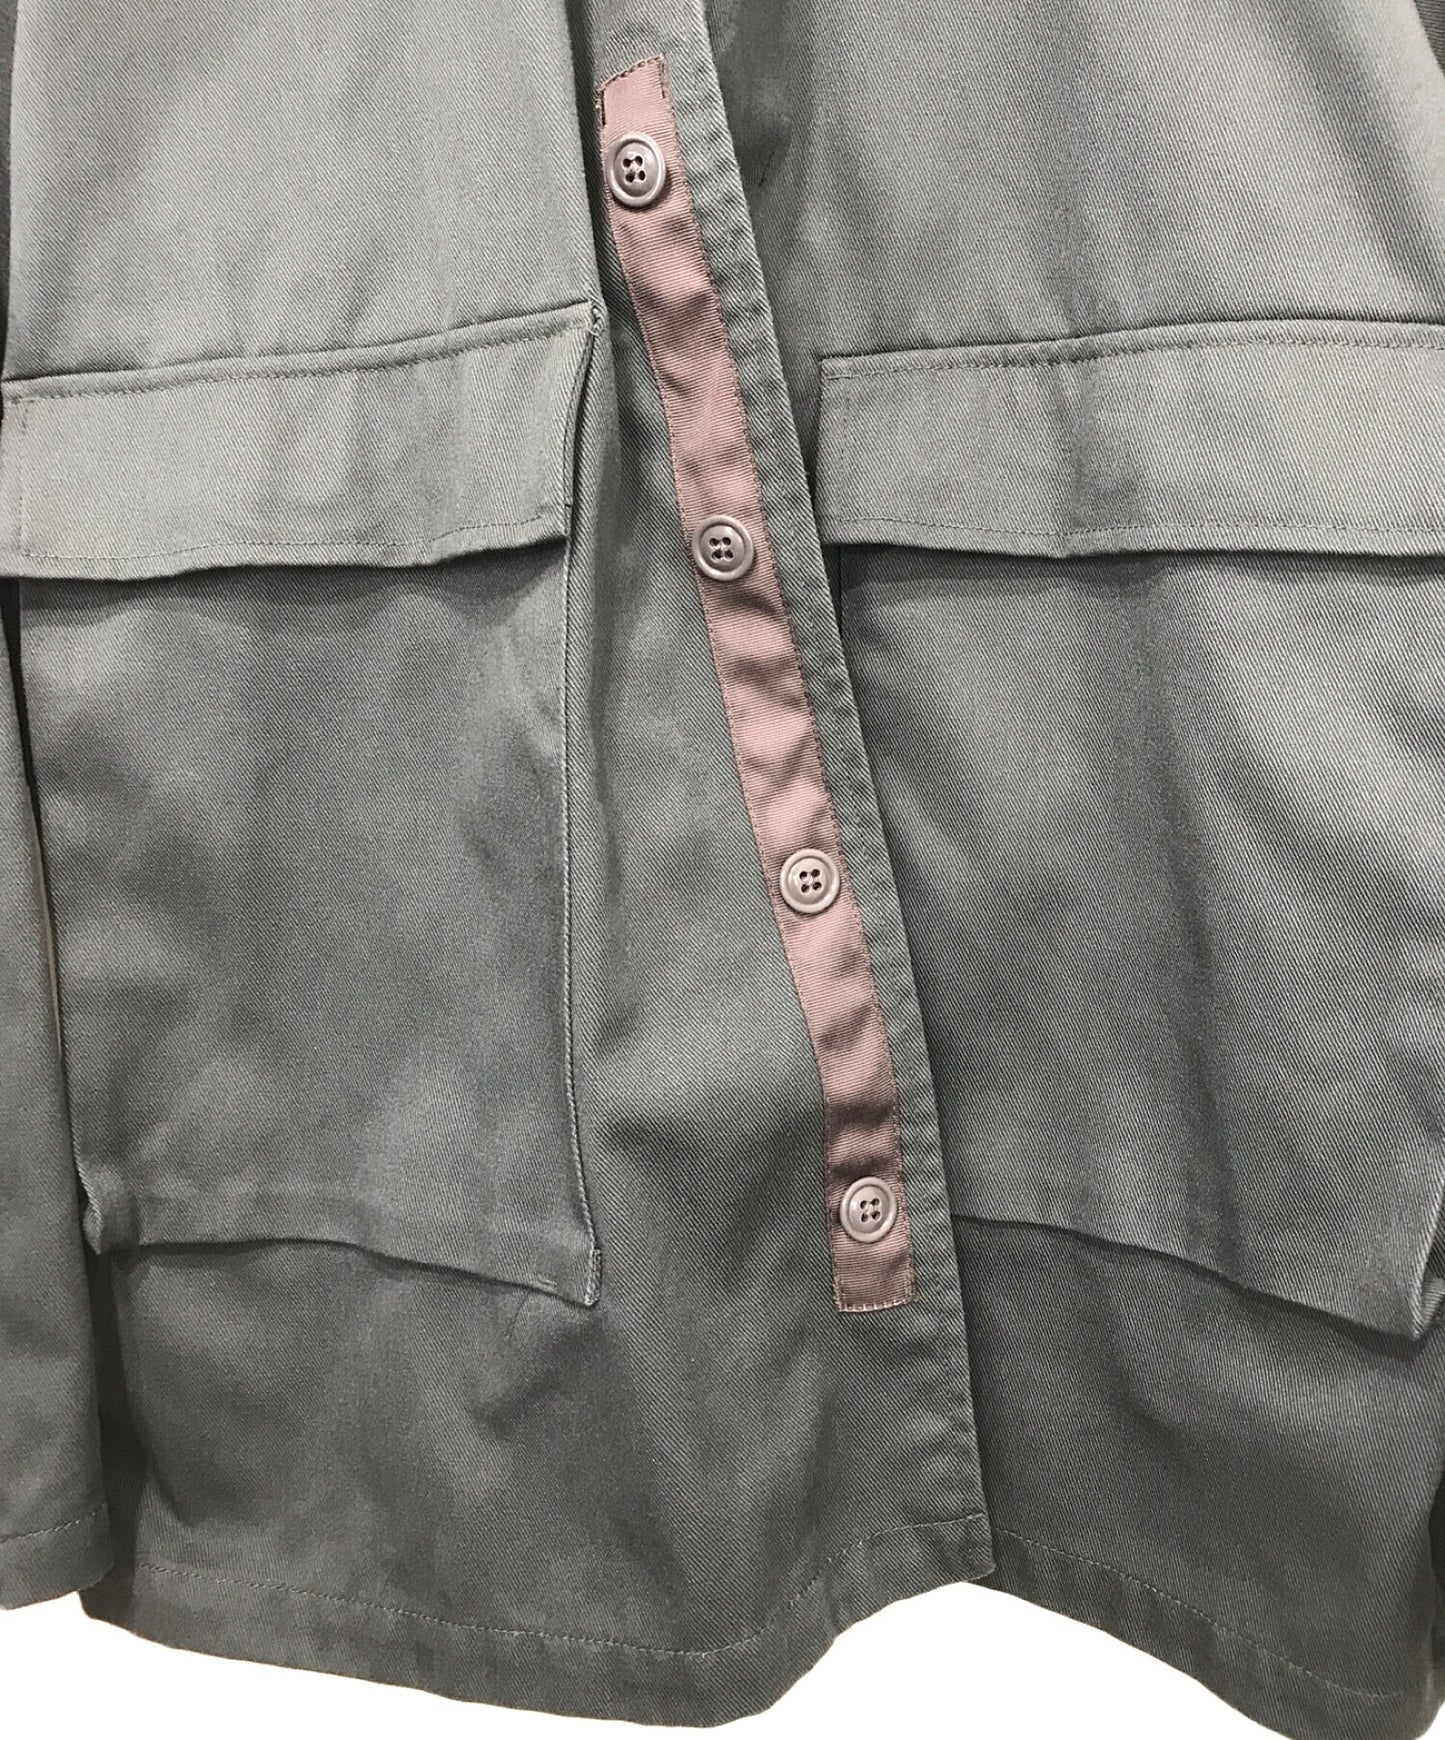 [Pre-owned] DESCENDANT Cotton Twill Jacket